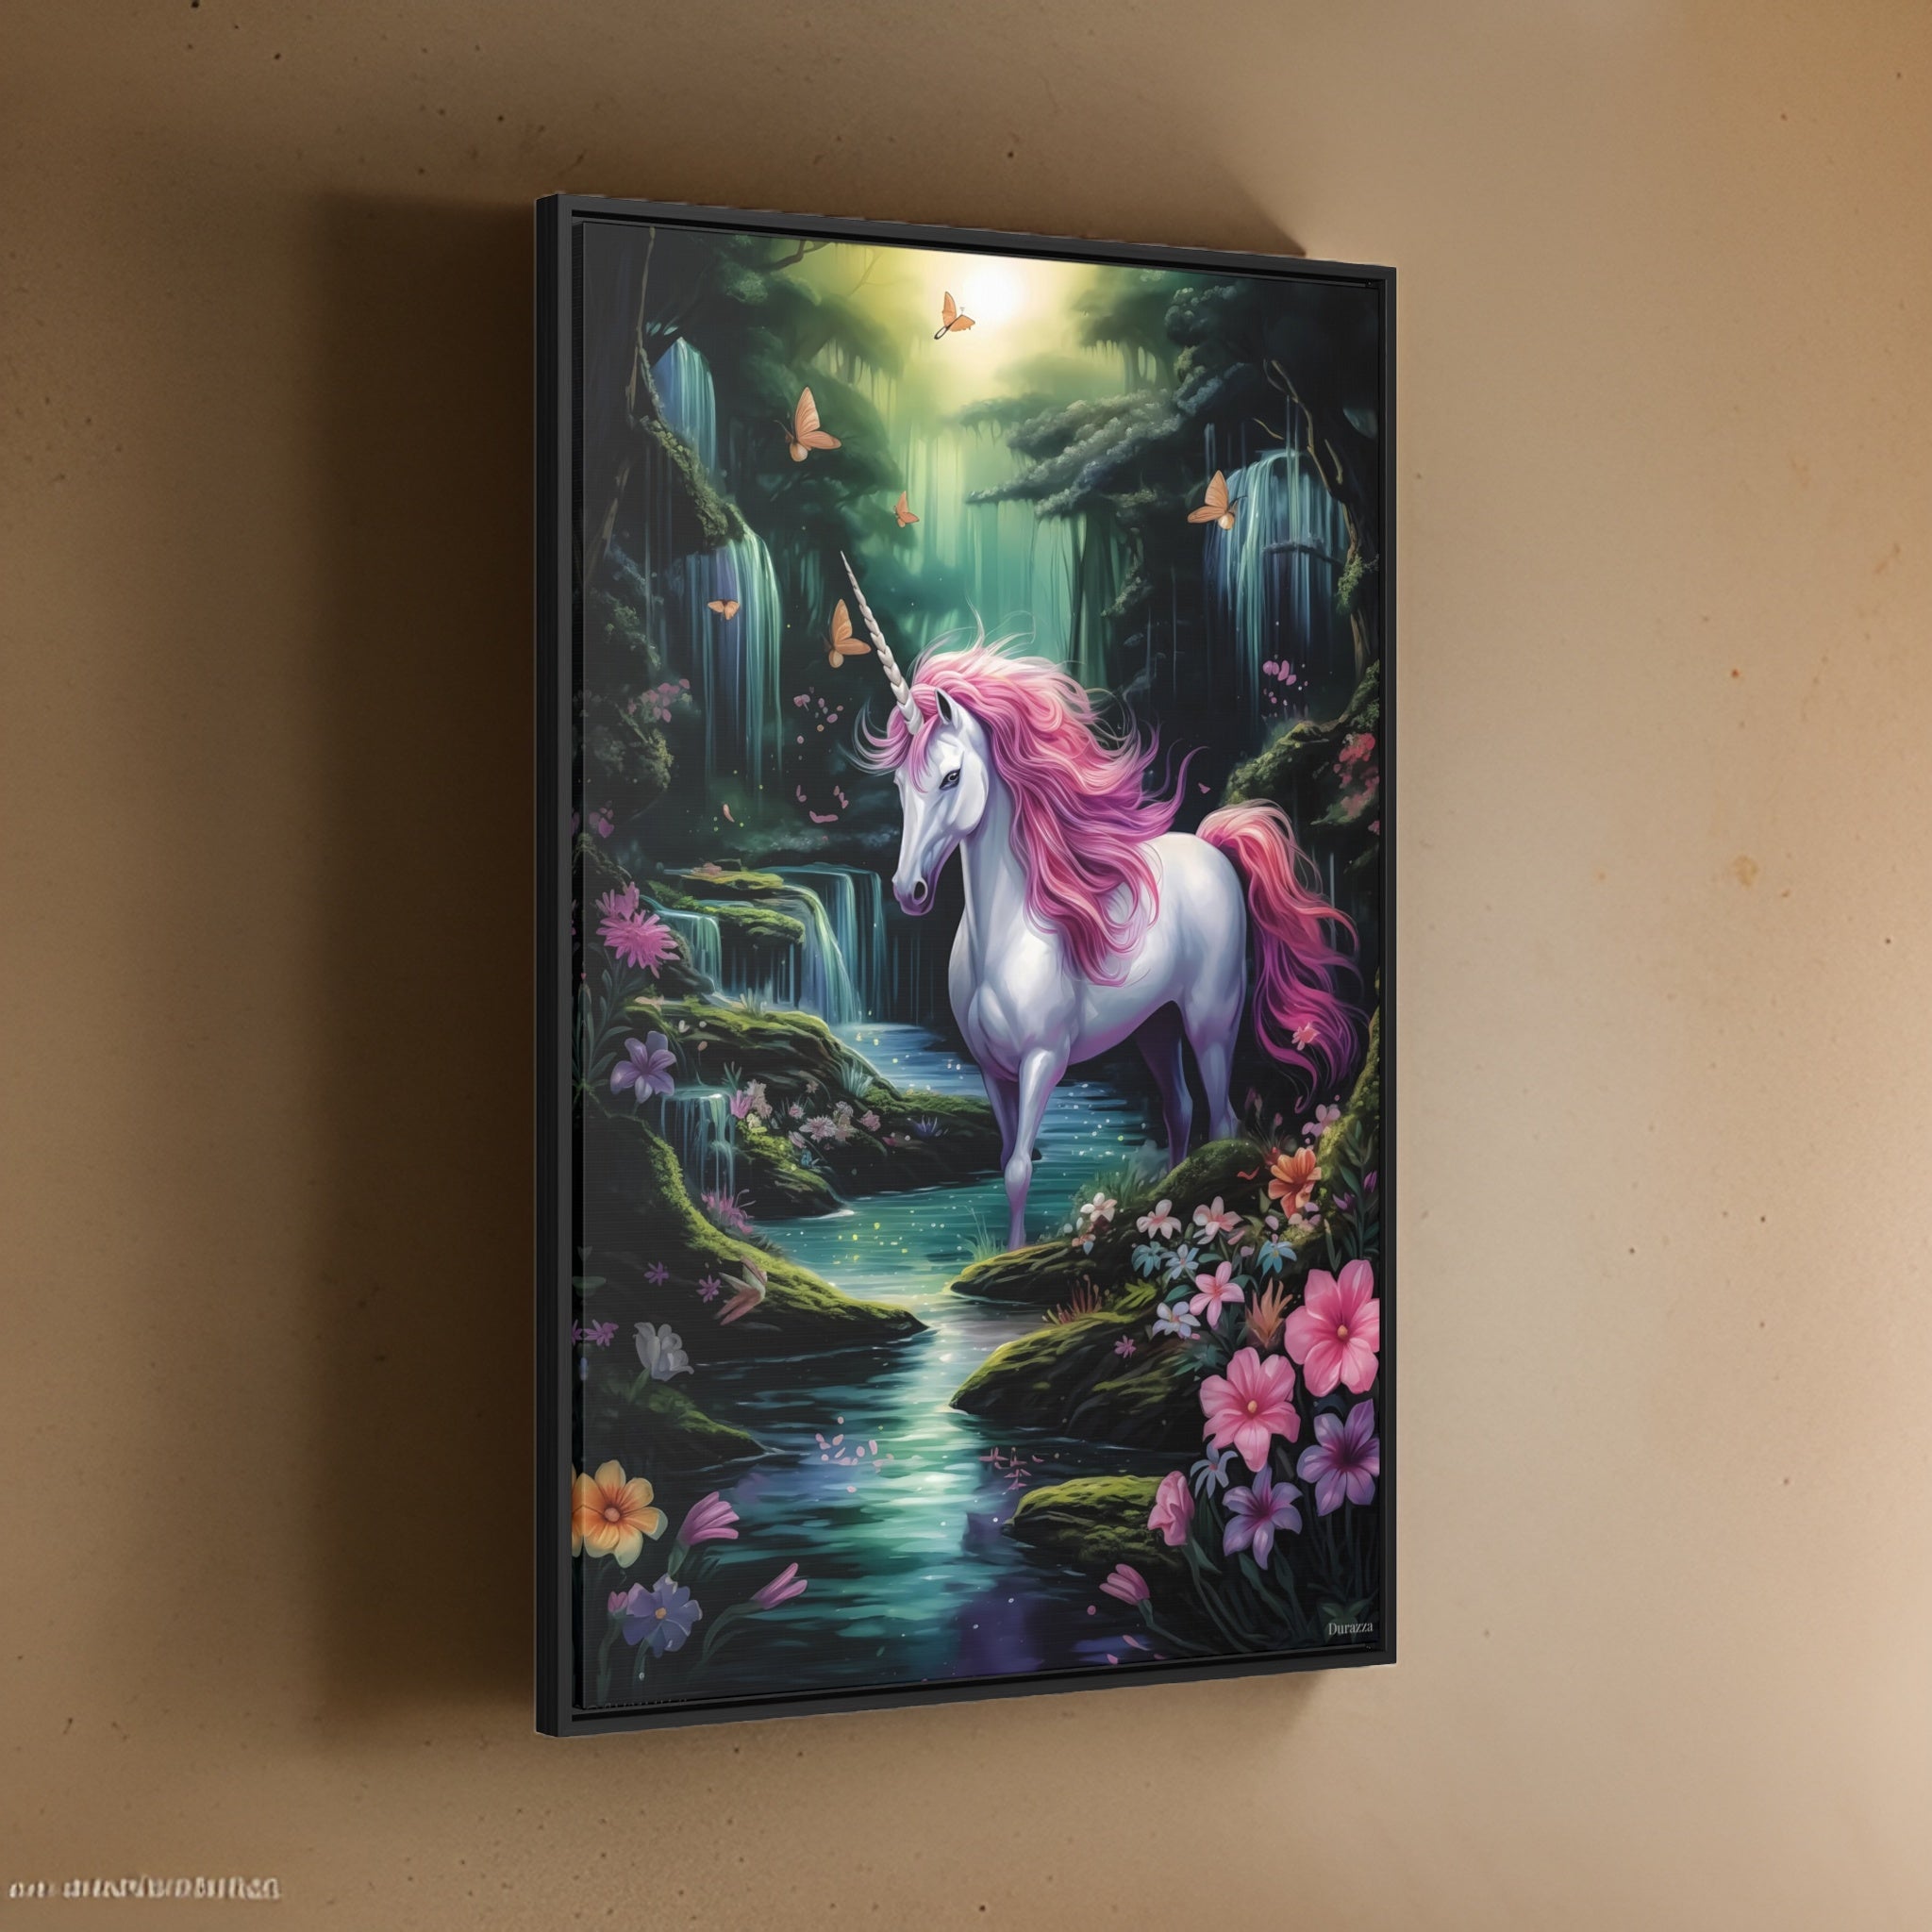 Magical Pink Unicorn Wall Art: Whimsical Fairytale